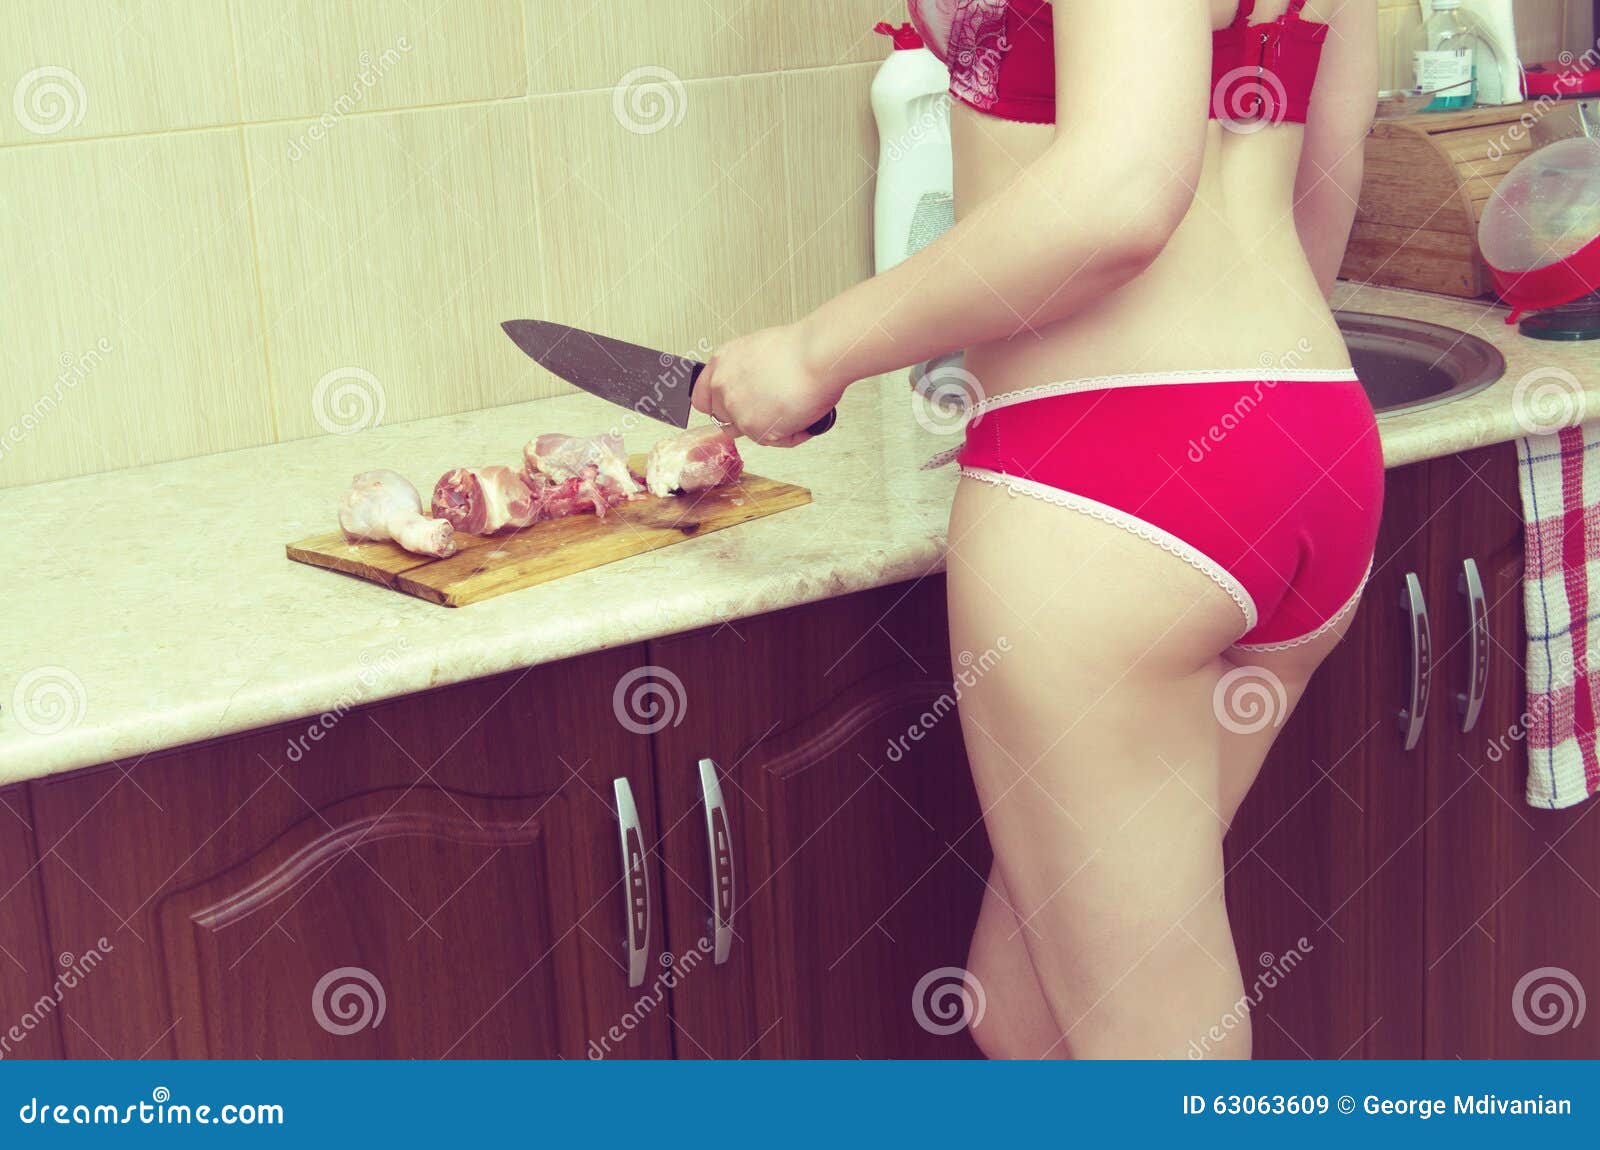 girl-underwear-kitchen-chopping-board-63063609.jpg